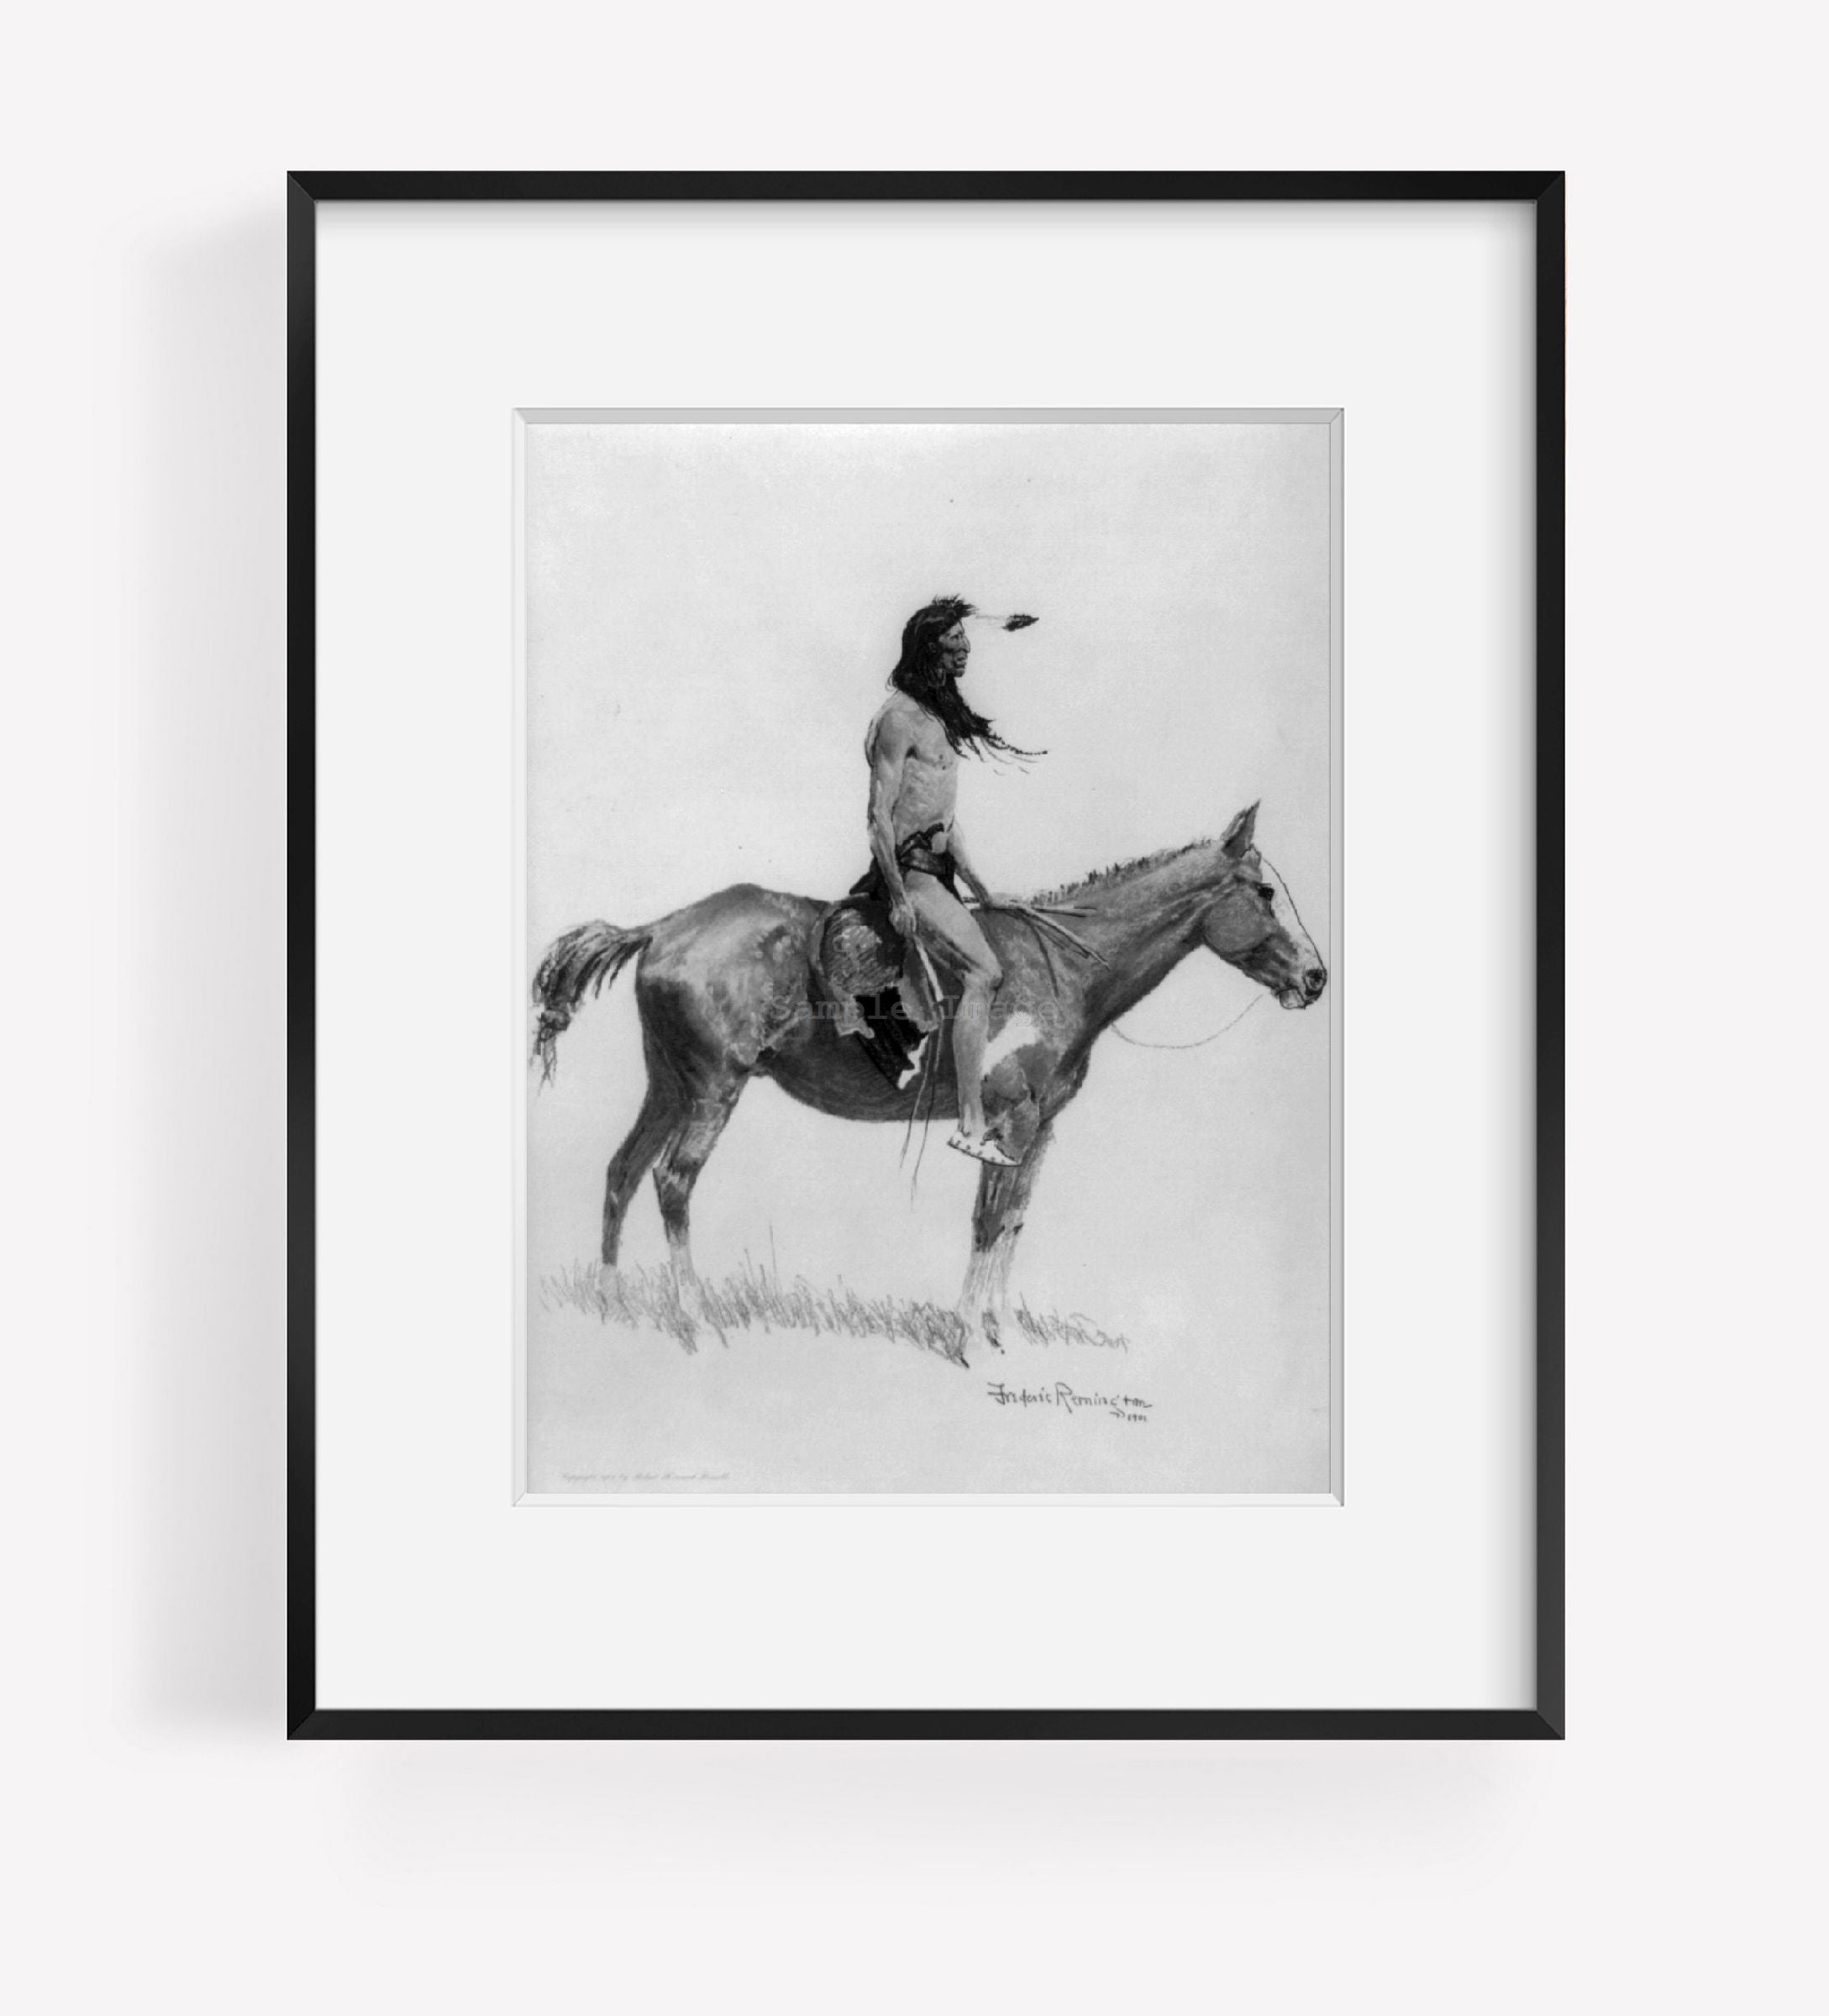 Photo: A Sioux chief on horseback, 1901, Frederic Remington, photograph